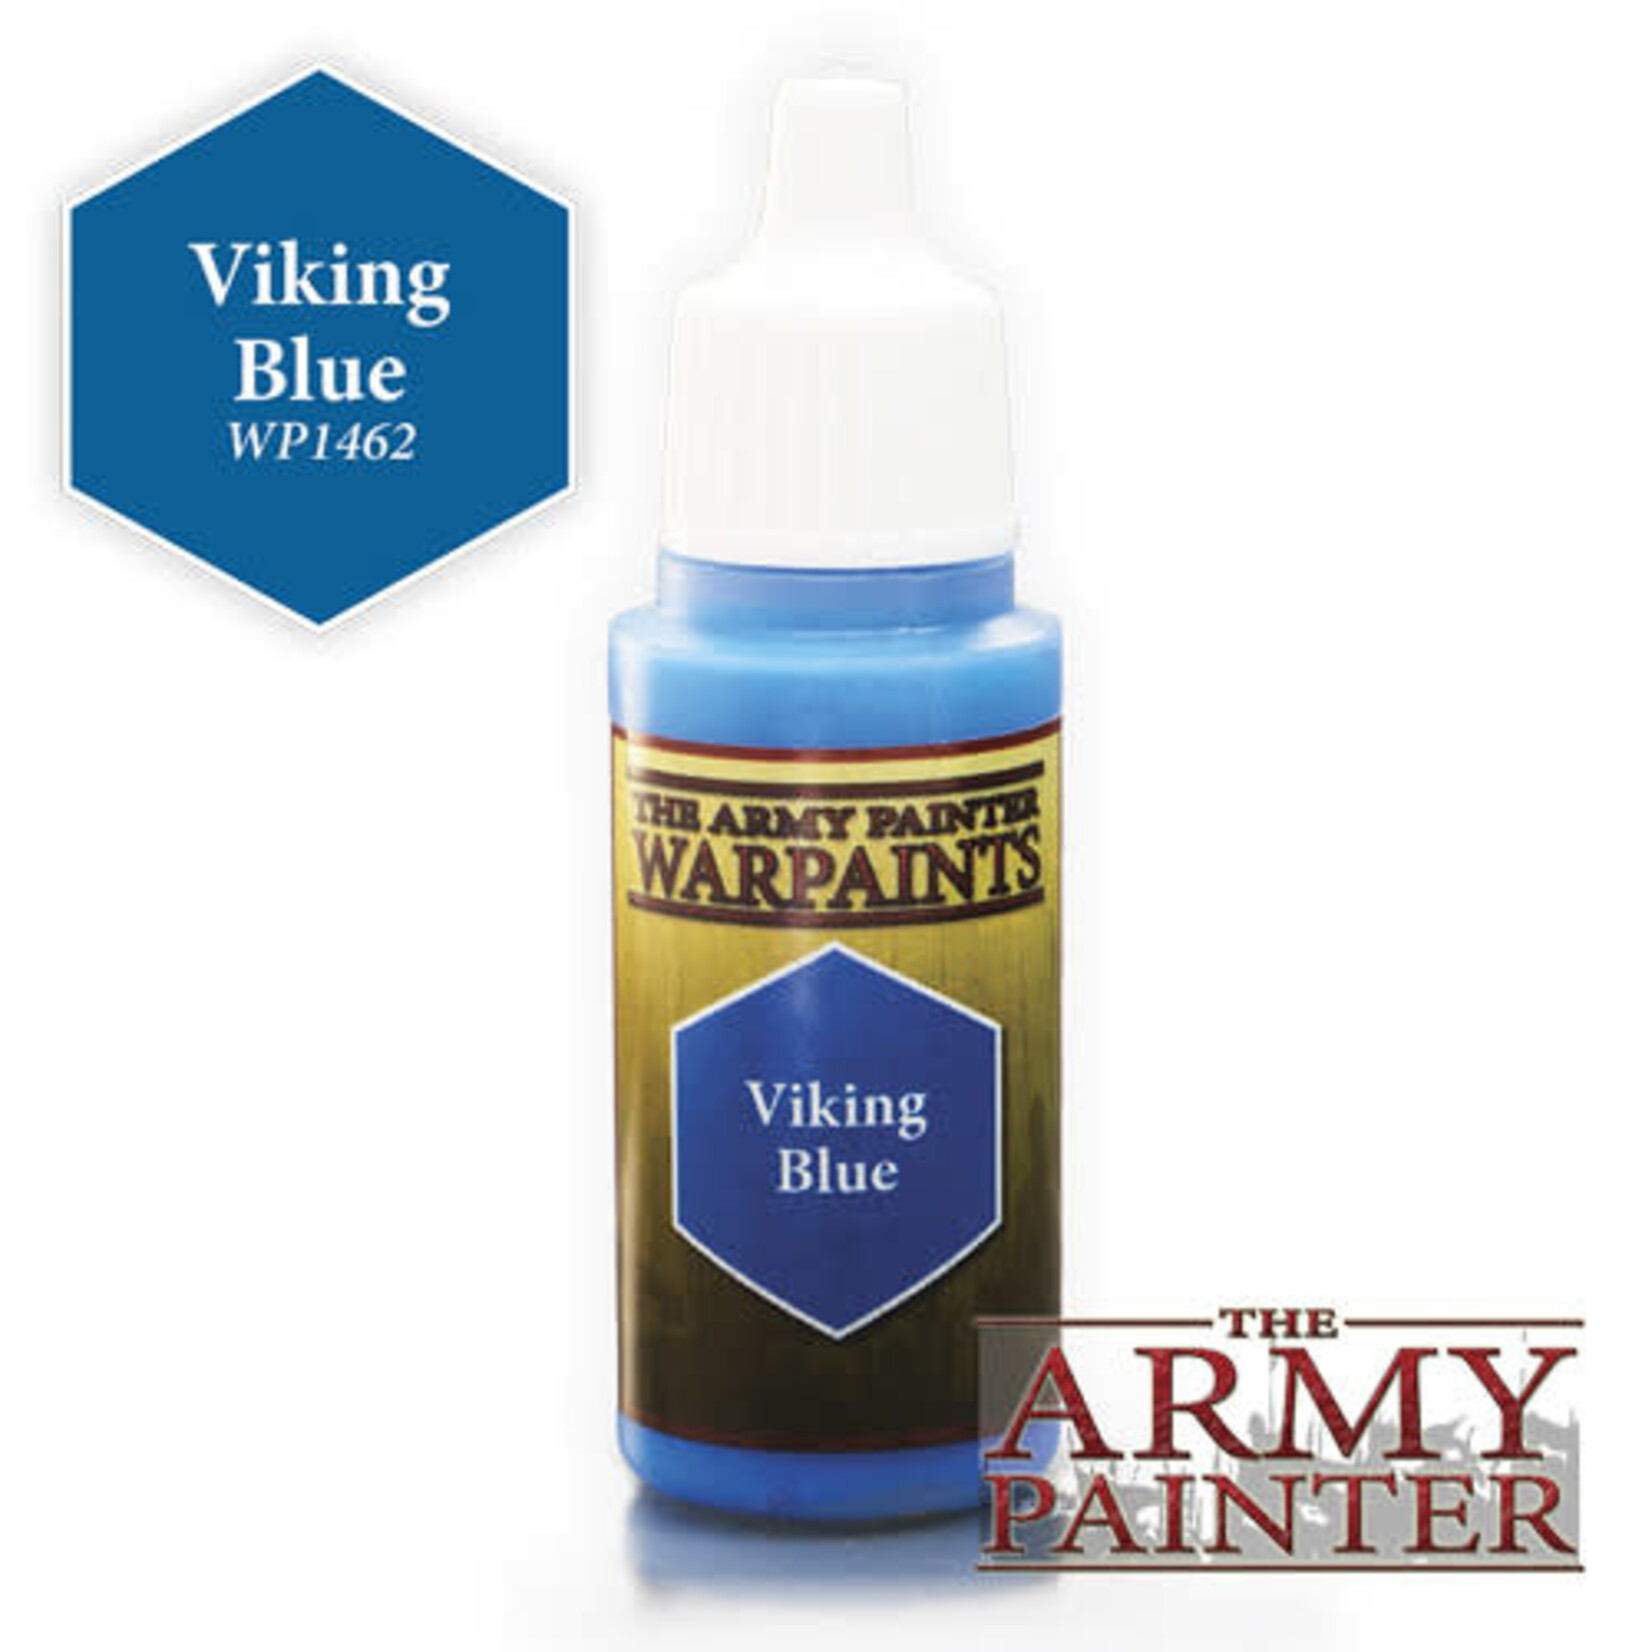 The Army Painter Warpaints: Viking Blue 18ml